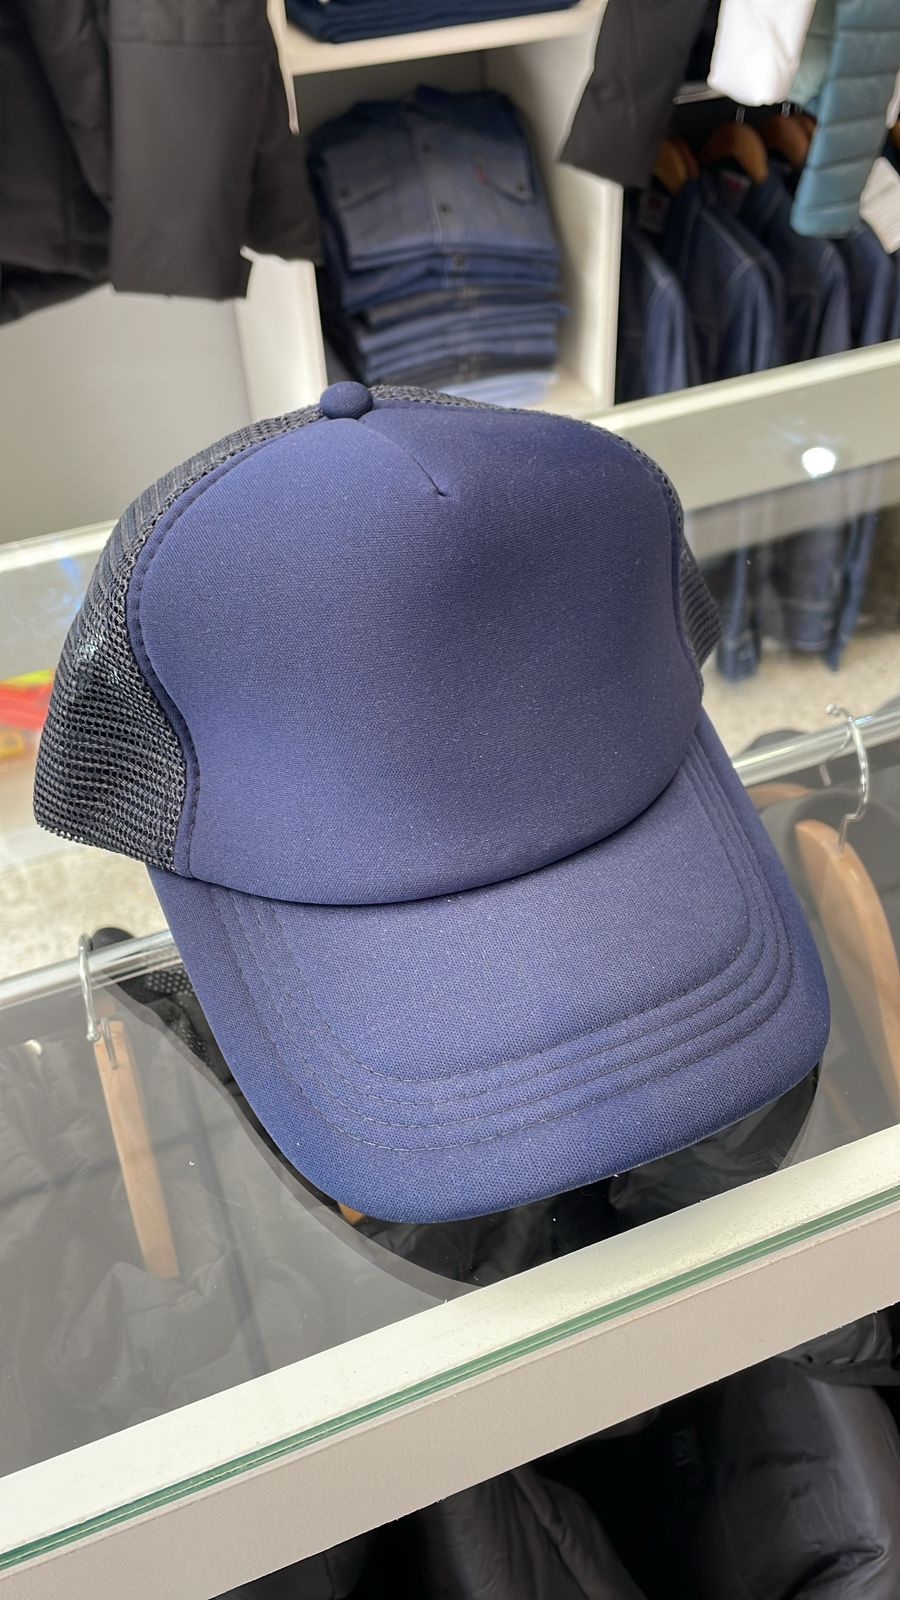 Gorra azul